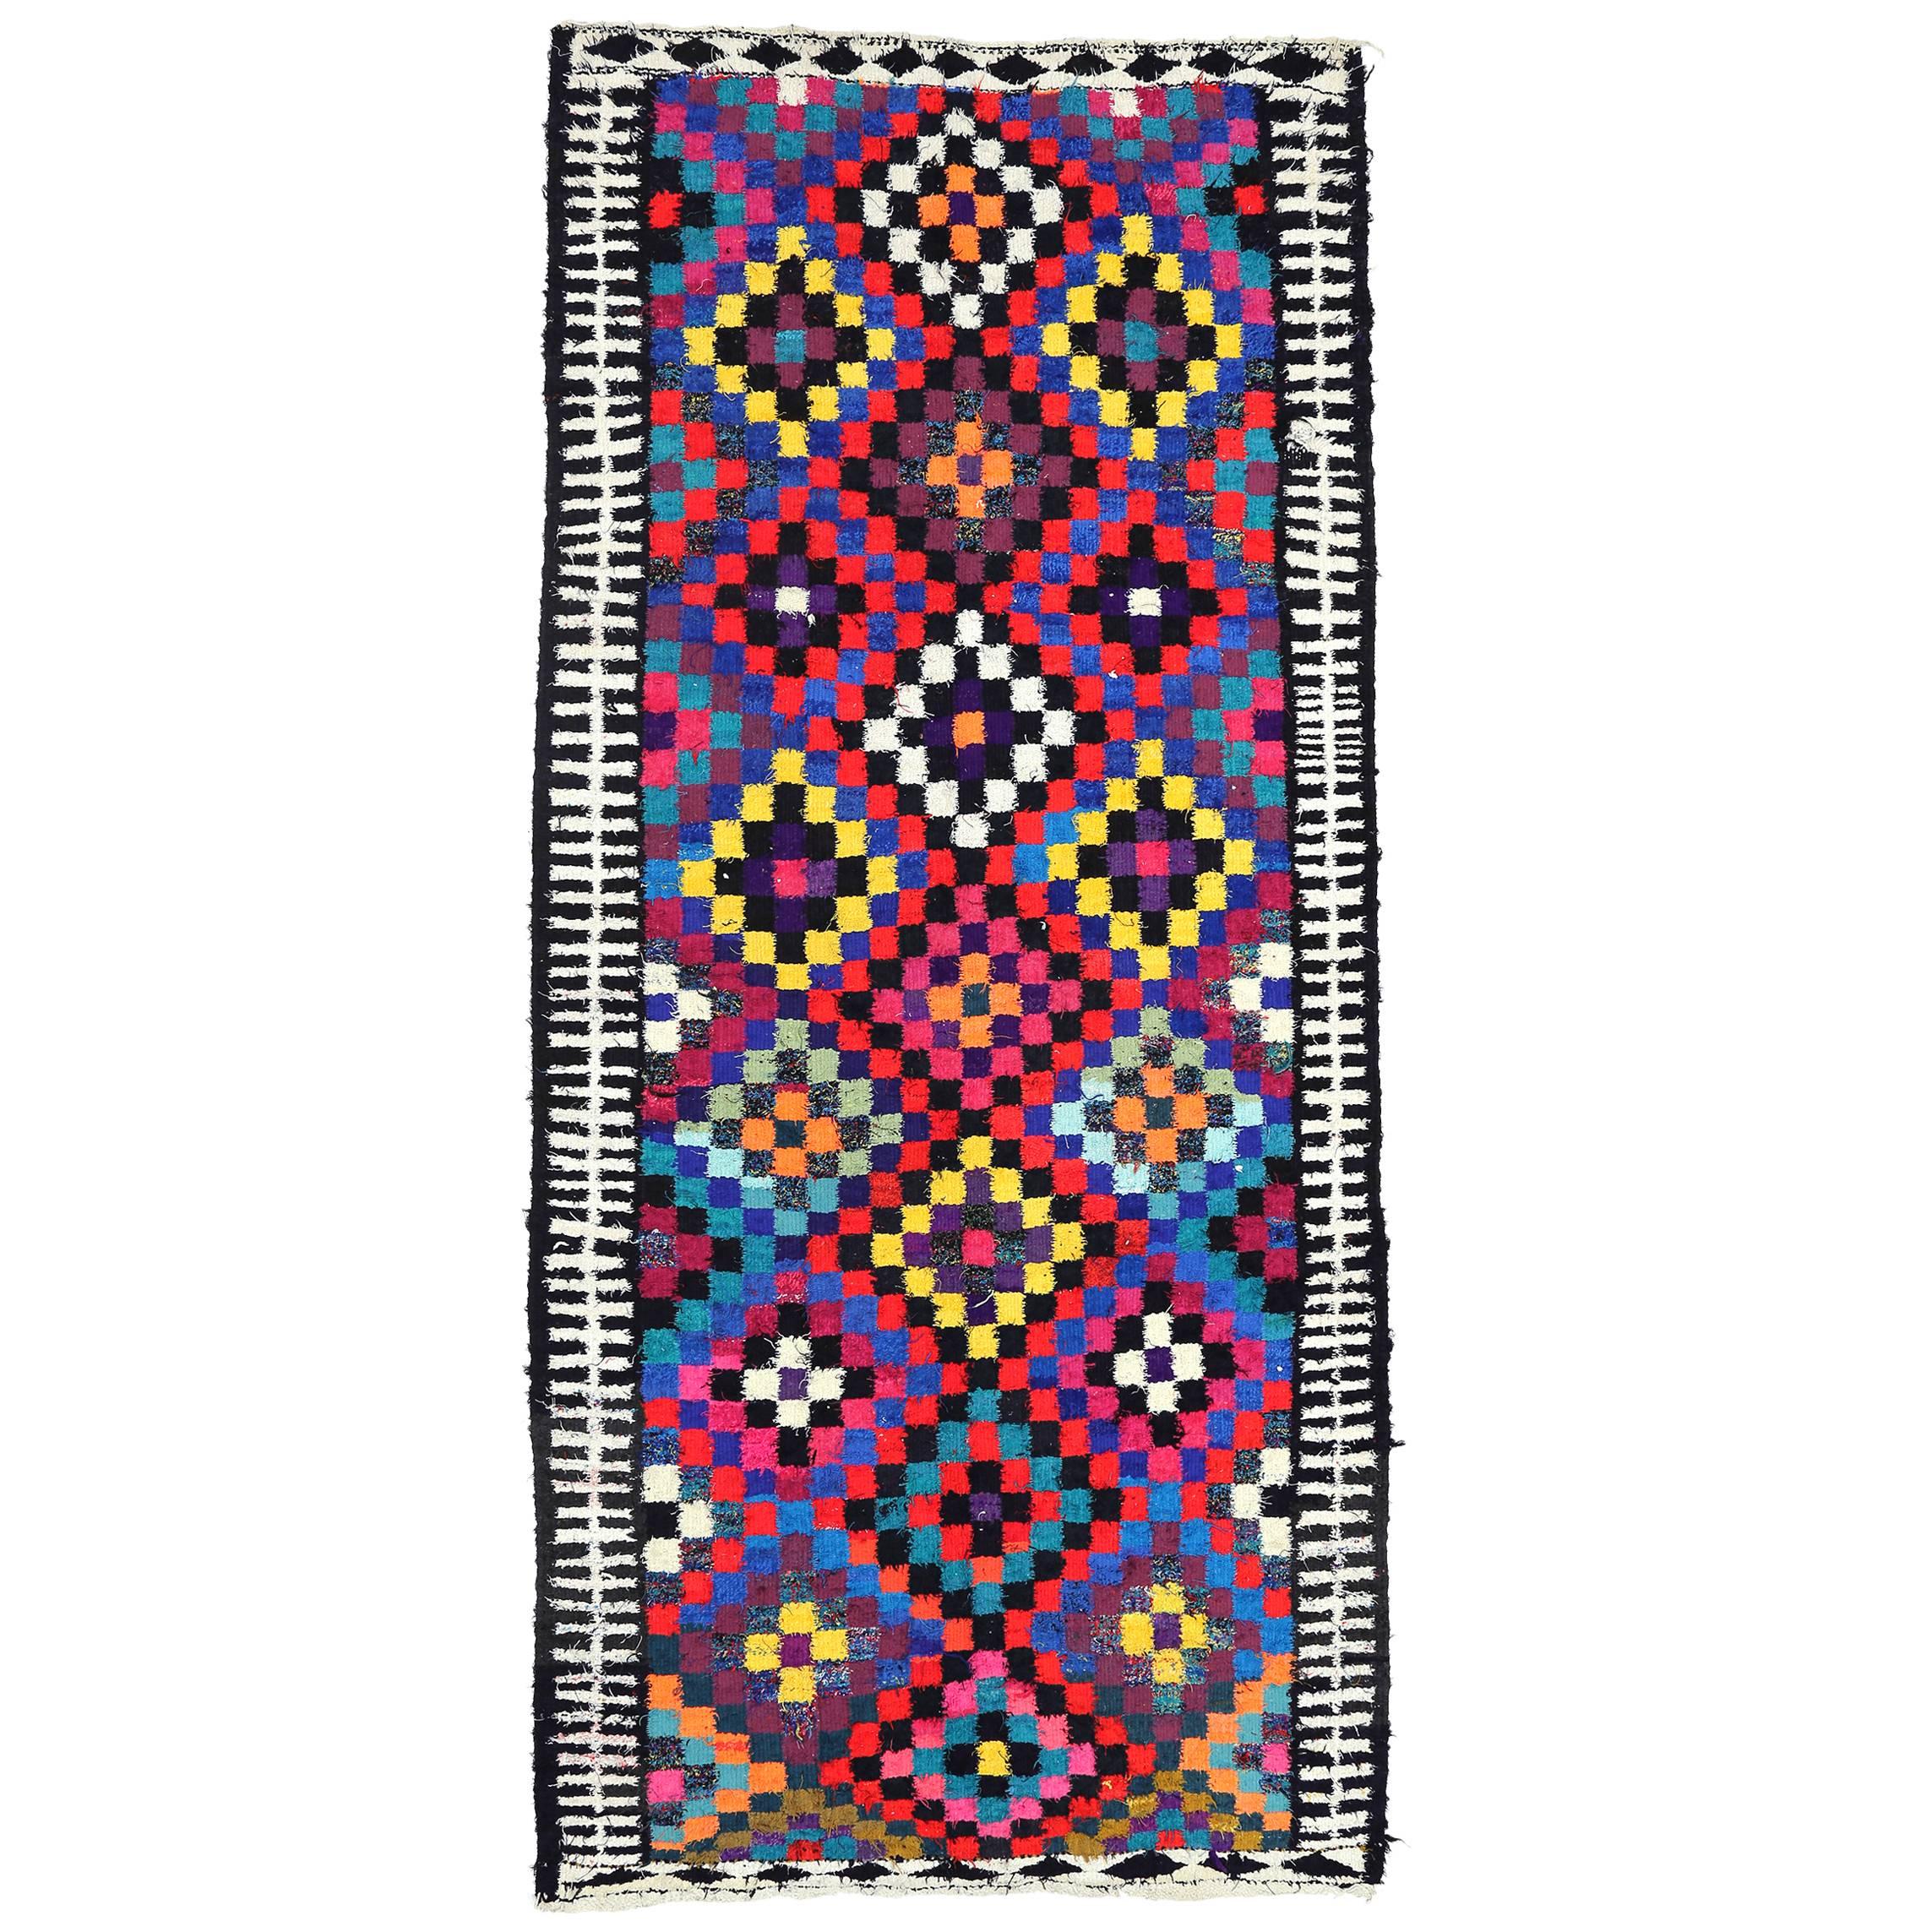 Vintage Persian Flat-Weave Kilim Rug